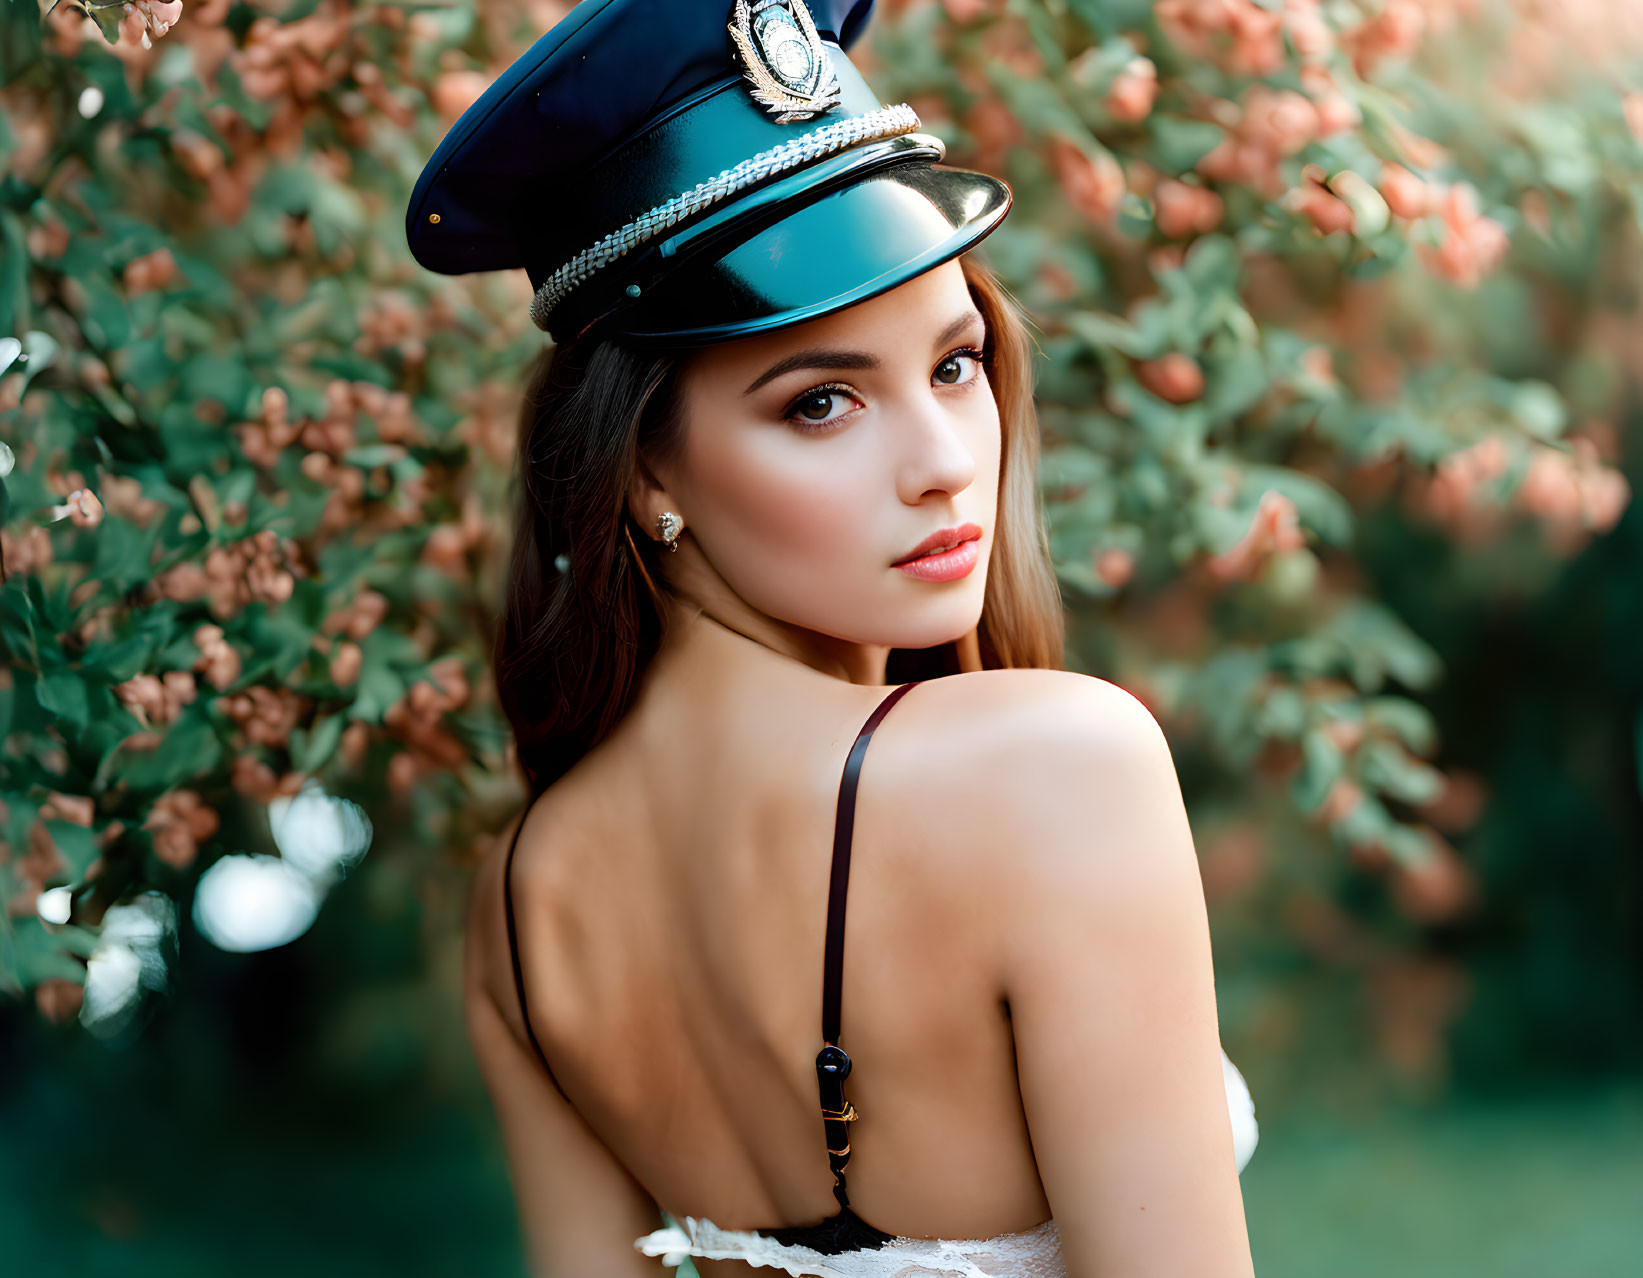 A beautiful policewoman